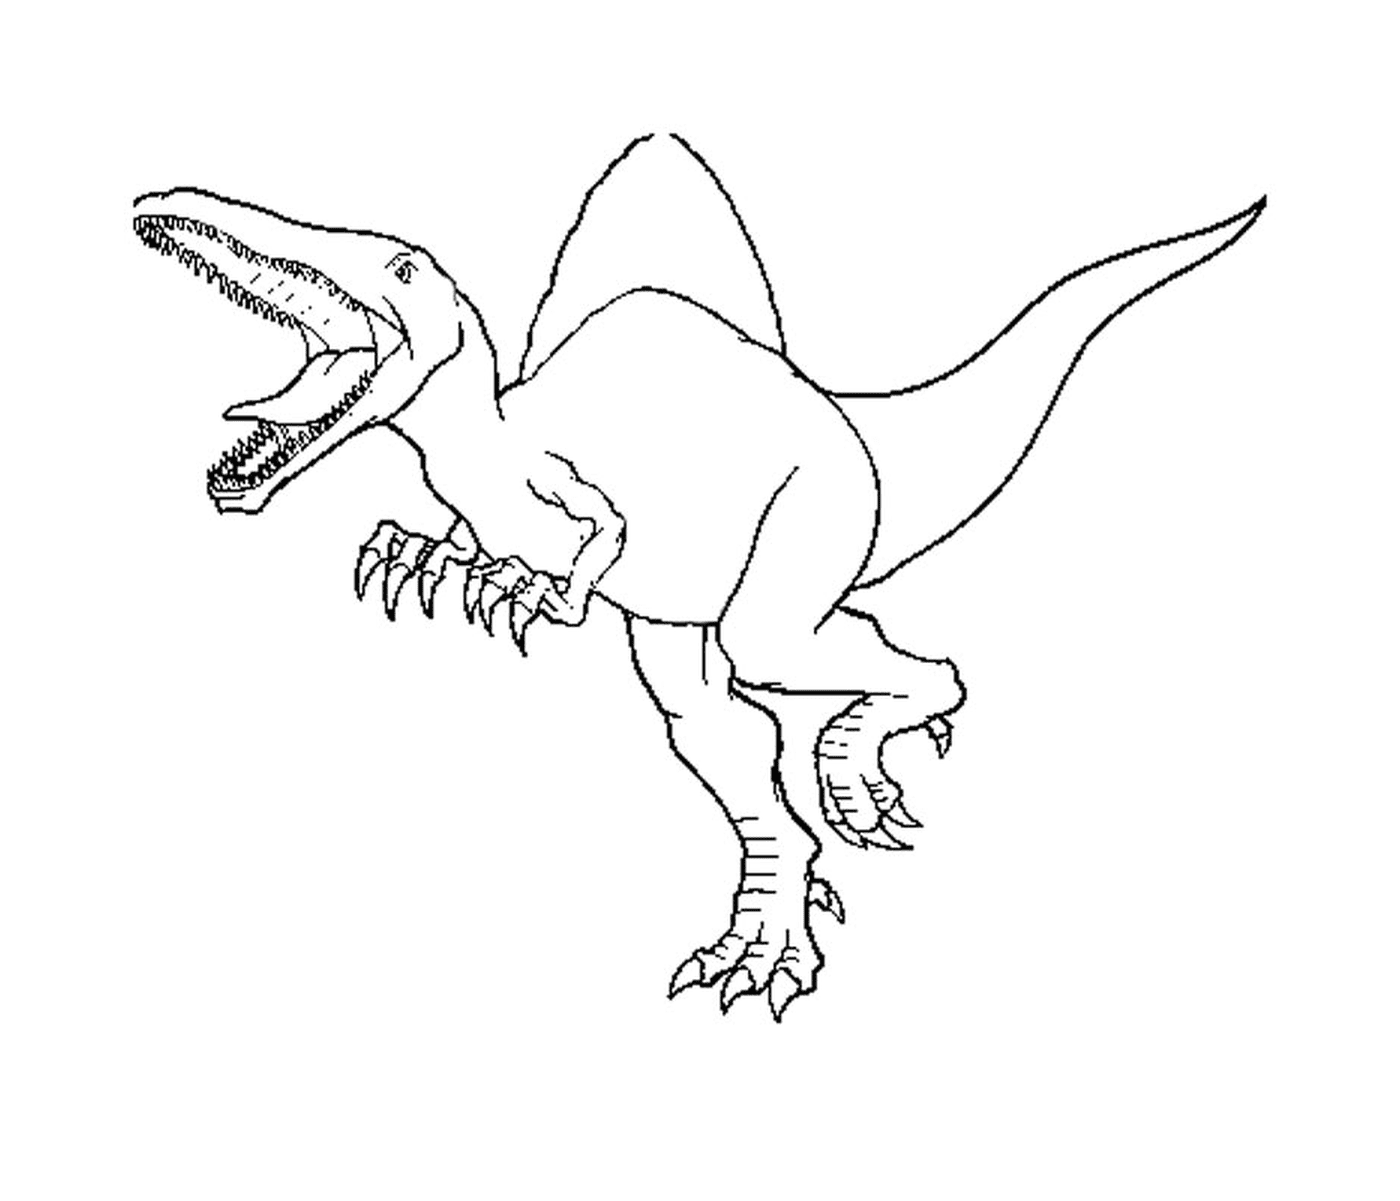   Spinosaurus de Jurassic Park, silhouette imposante 